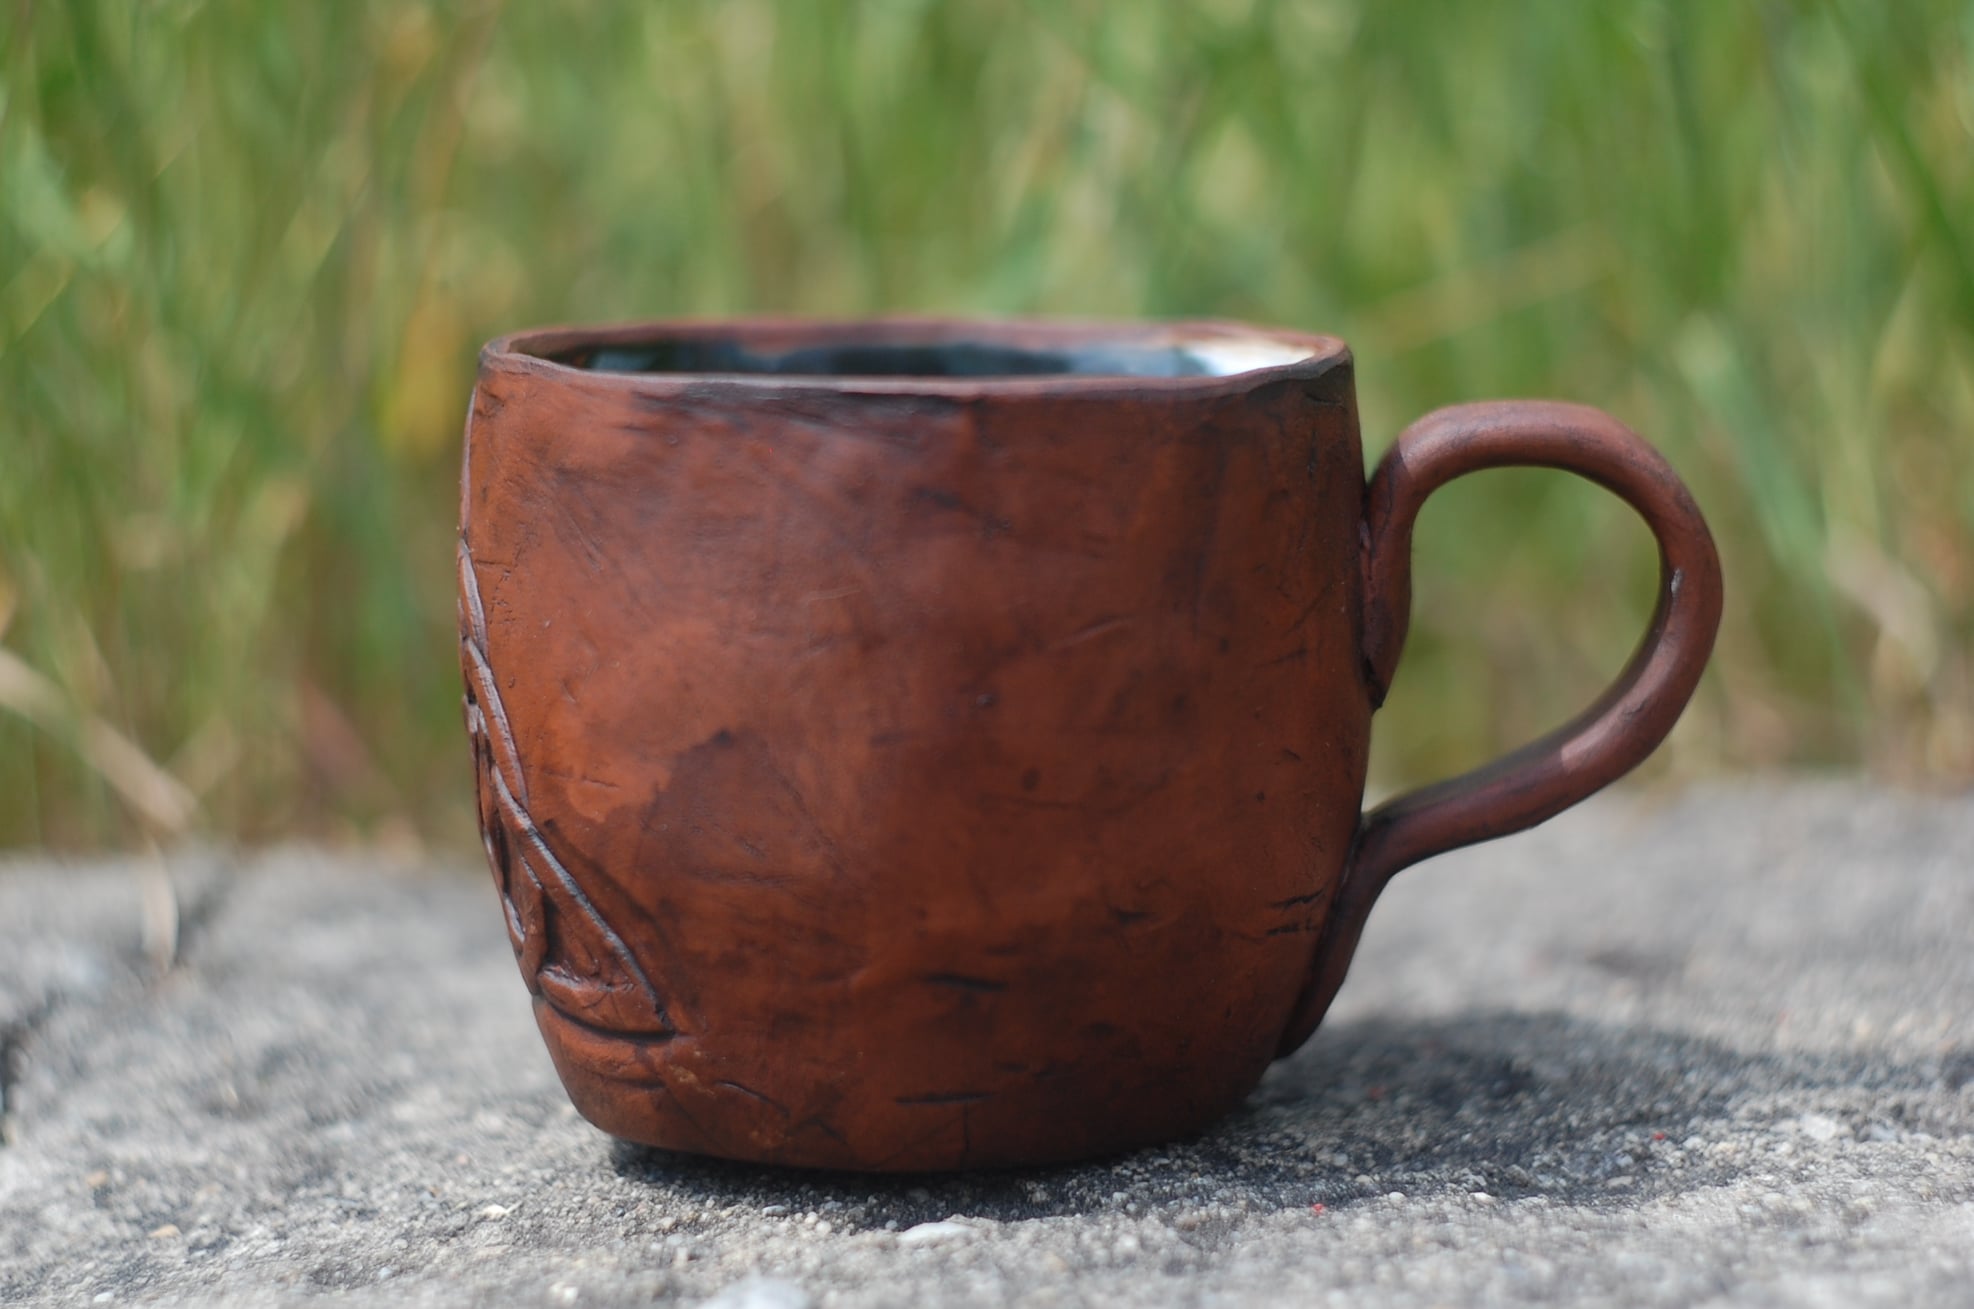 Triquetra pottery clay mug w/ handle